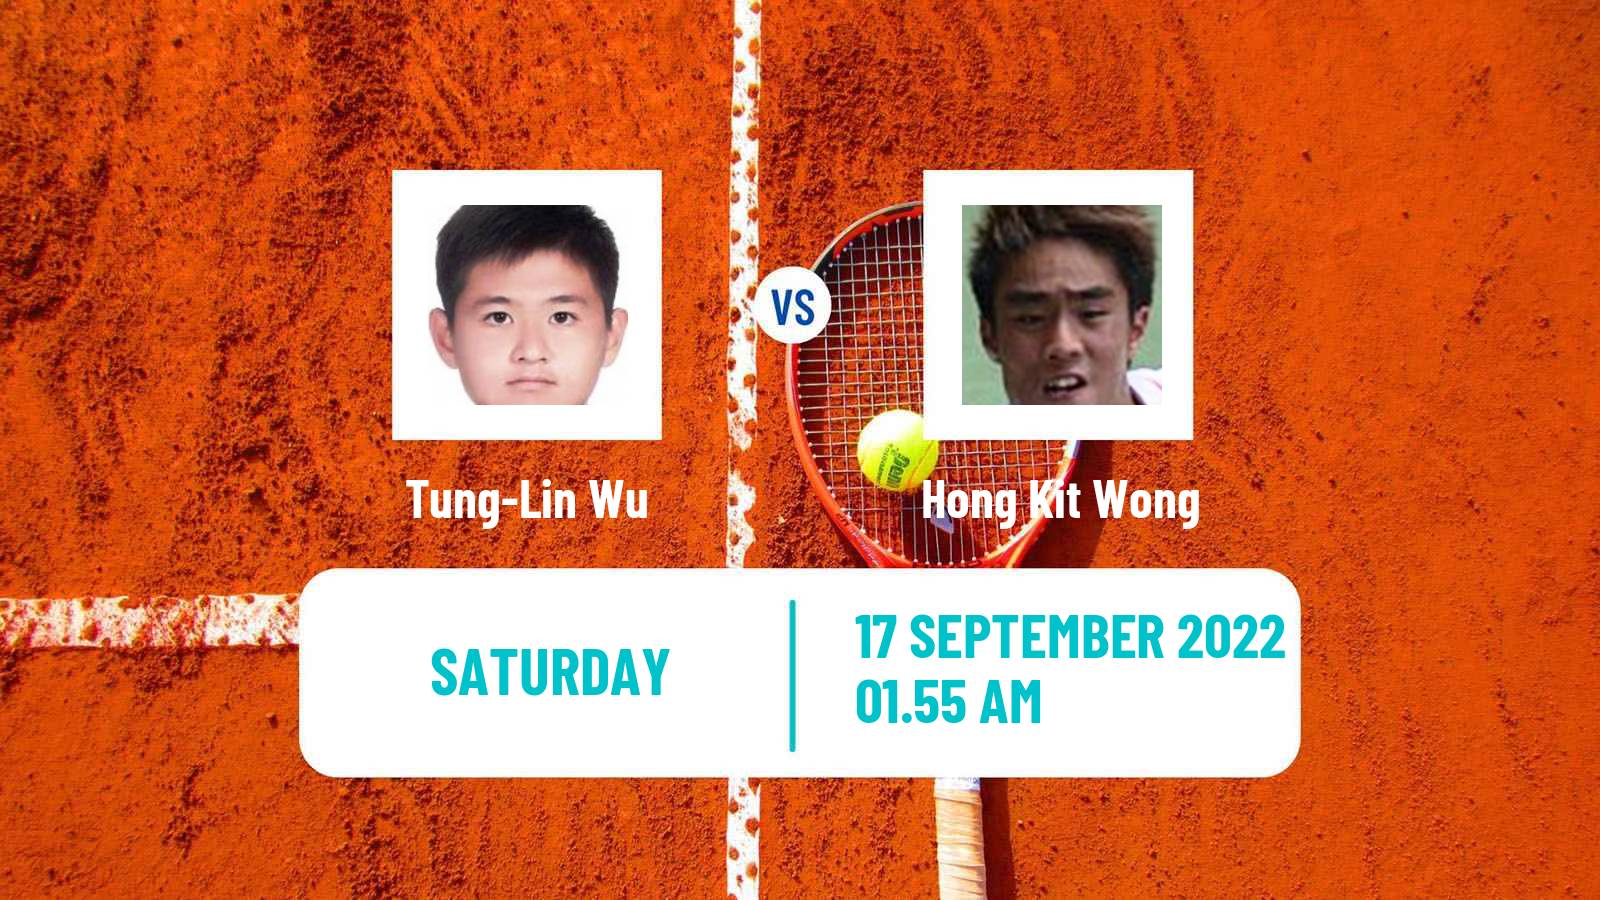 Tennis Davis Cup World Group II Tung-Lin Wu - Hong Kit Wong